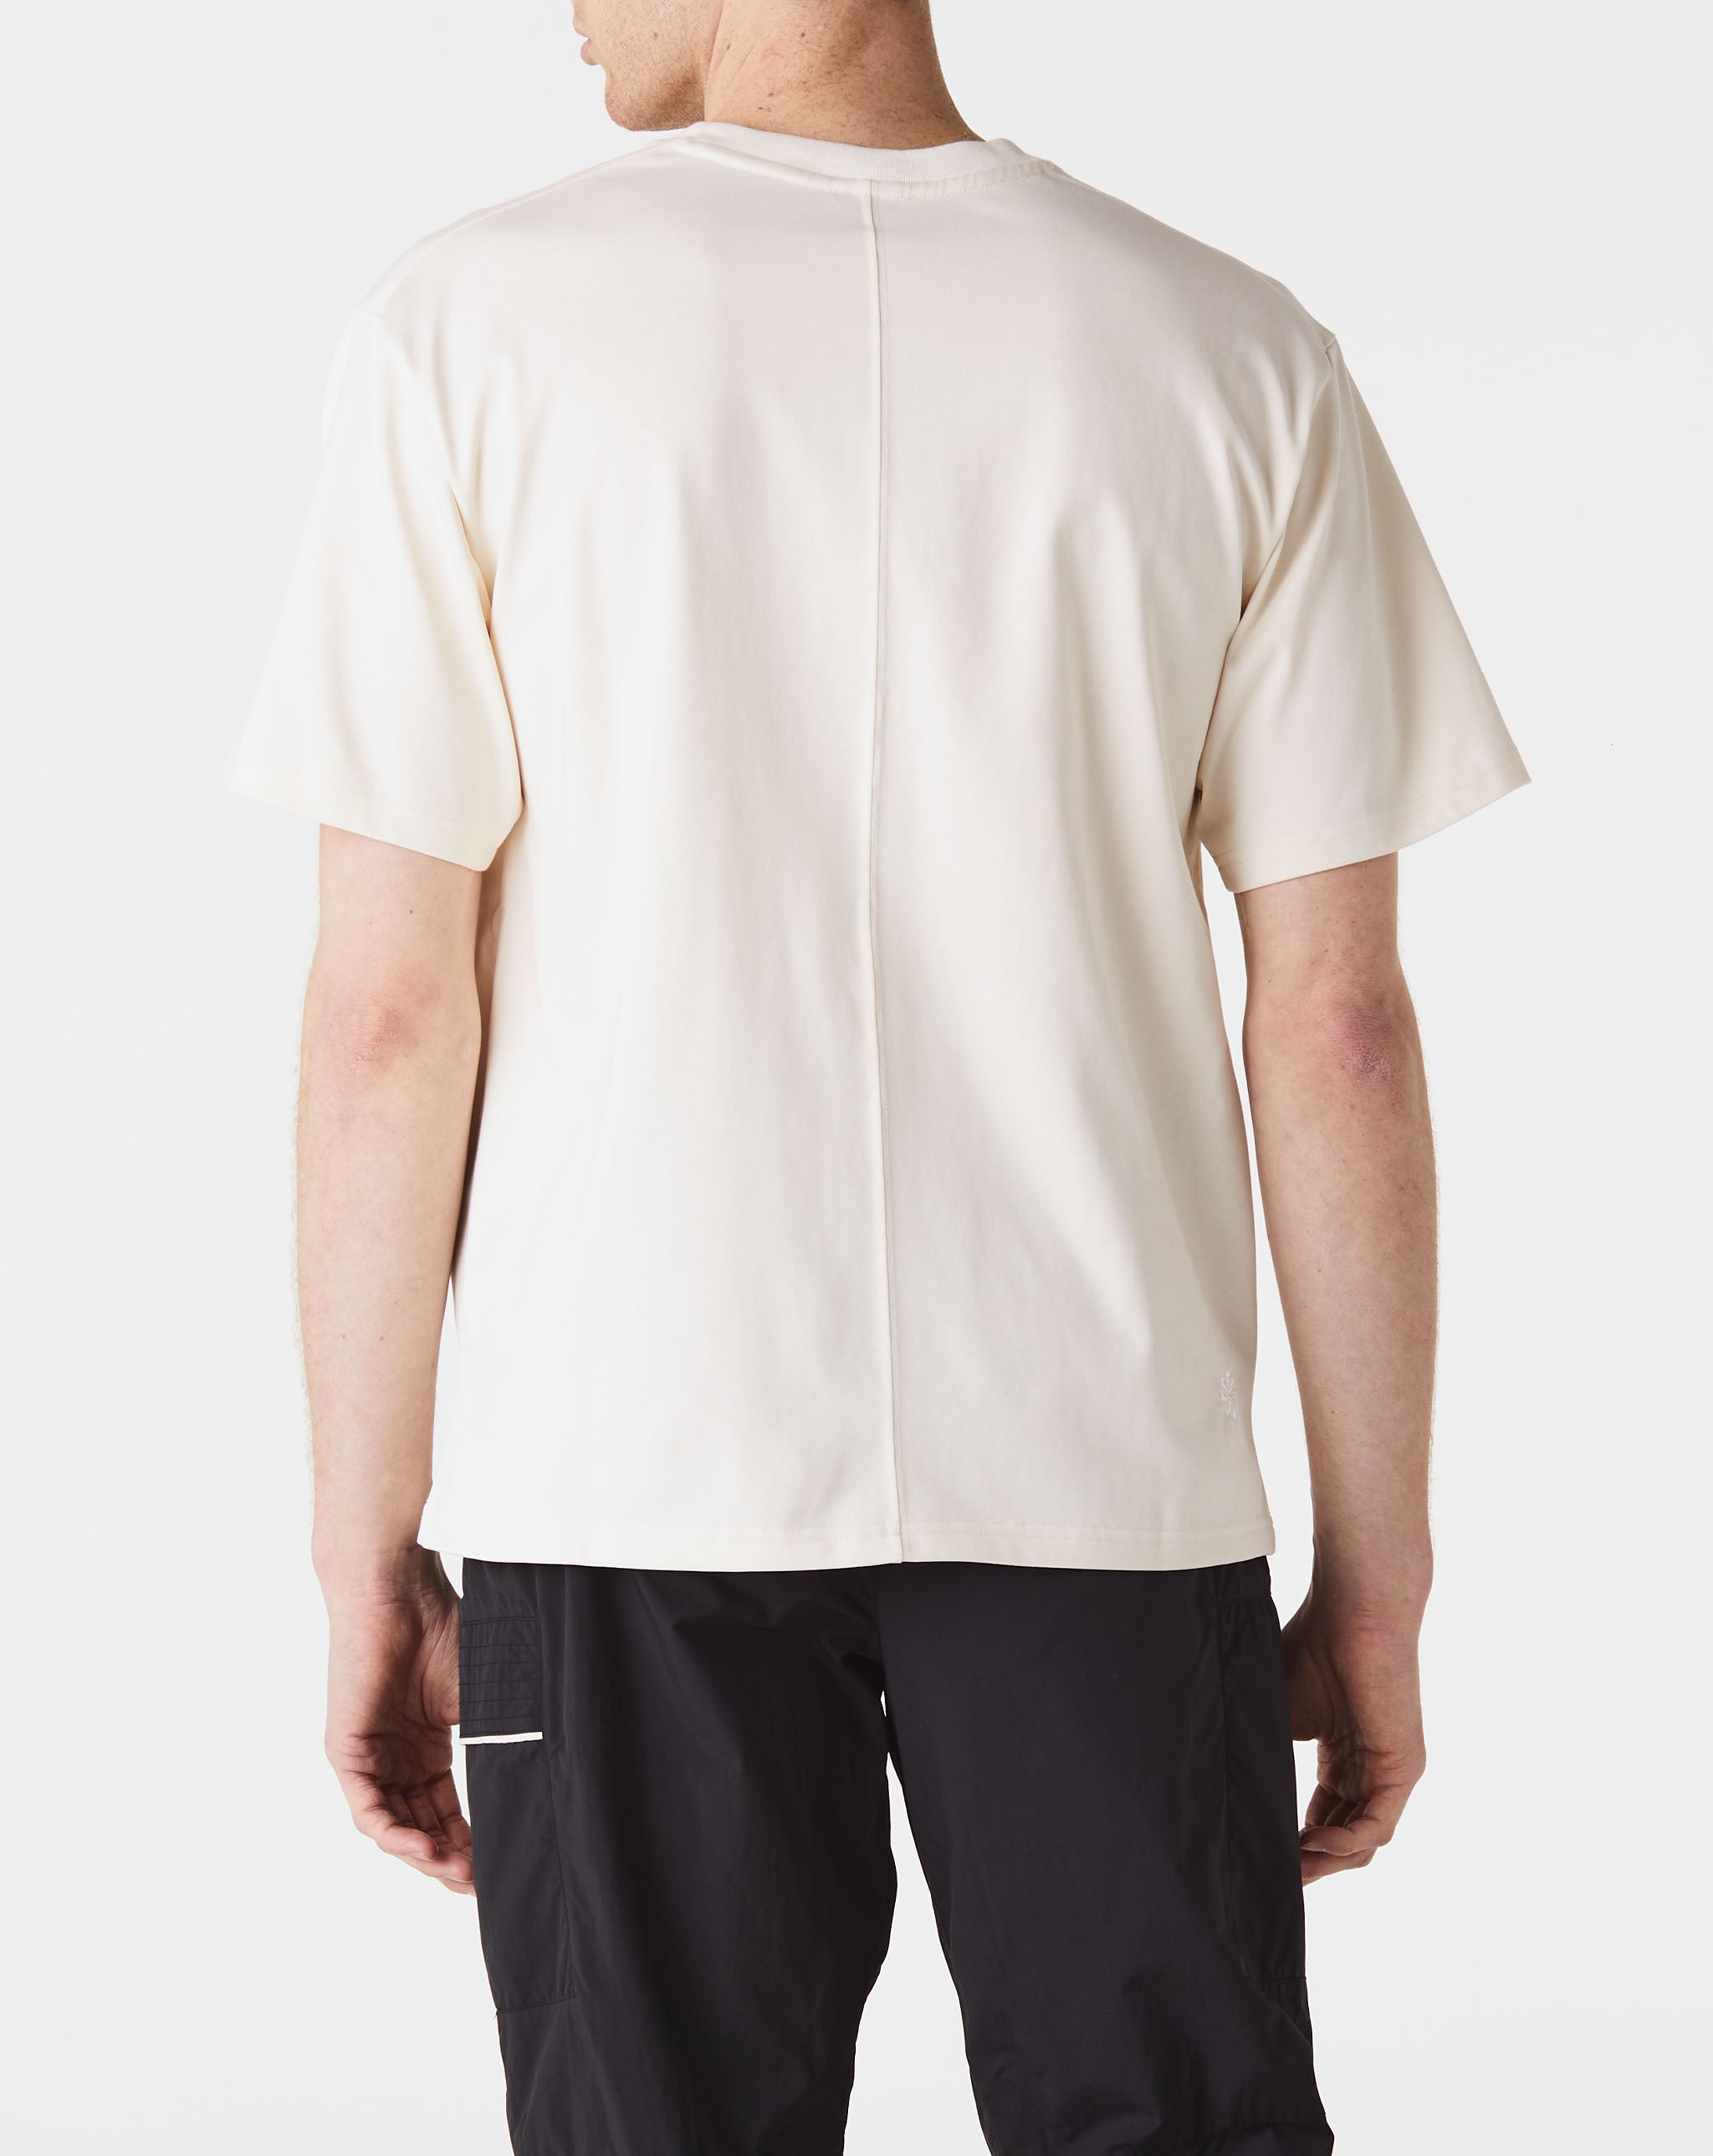 Nike Tech Pack Dri-FIT T-Shirt  - XHIBITION